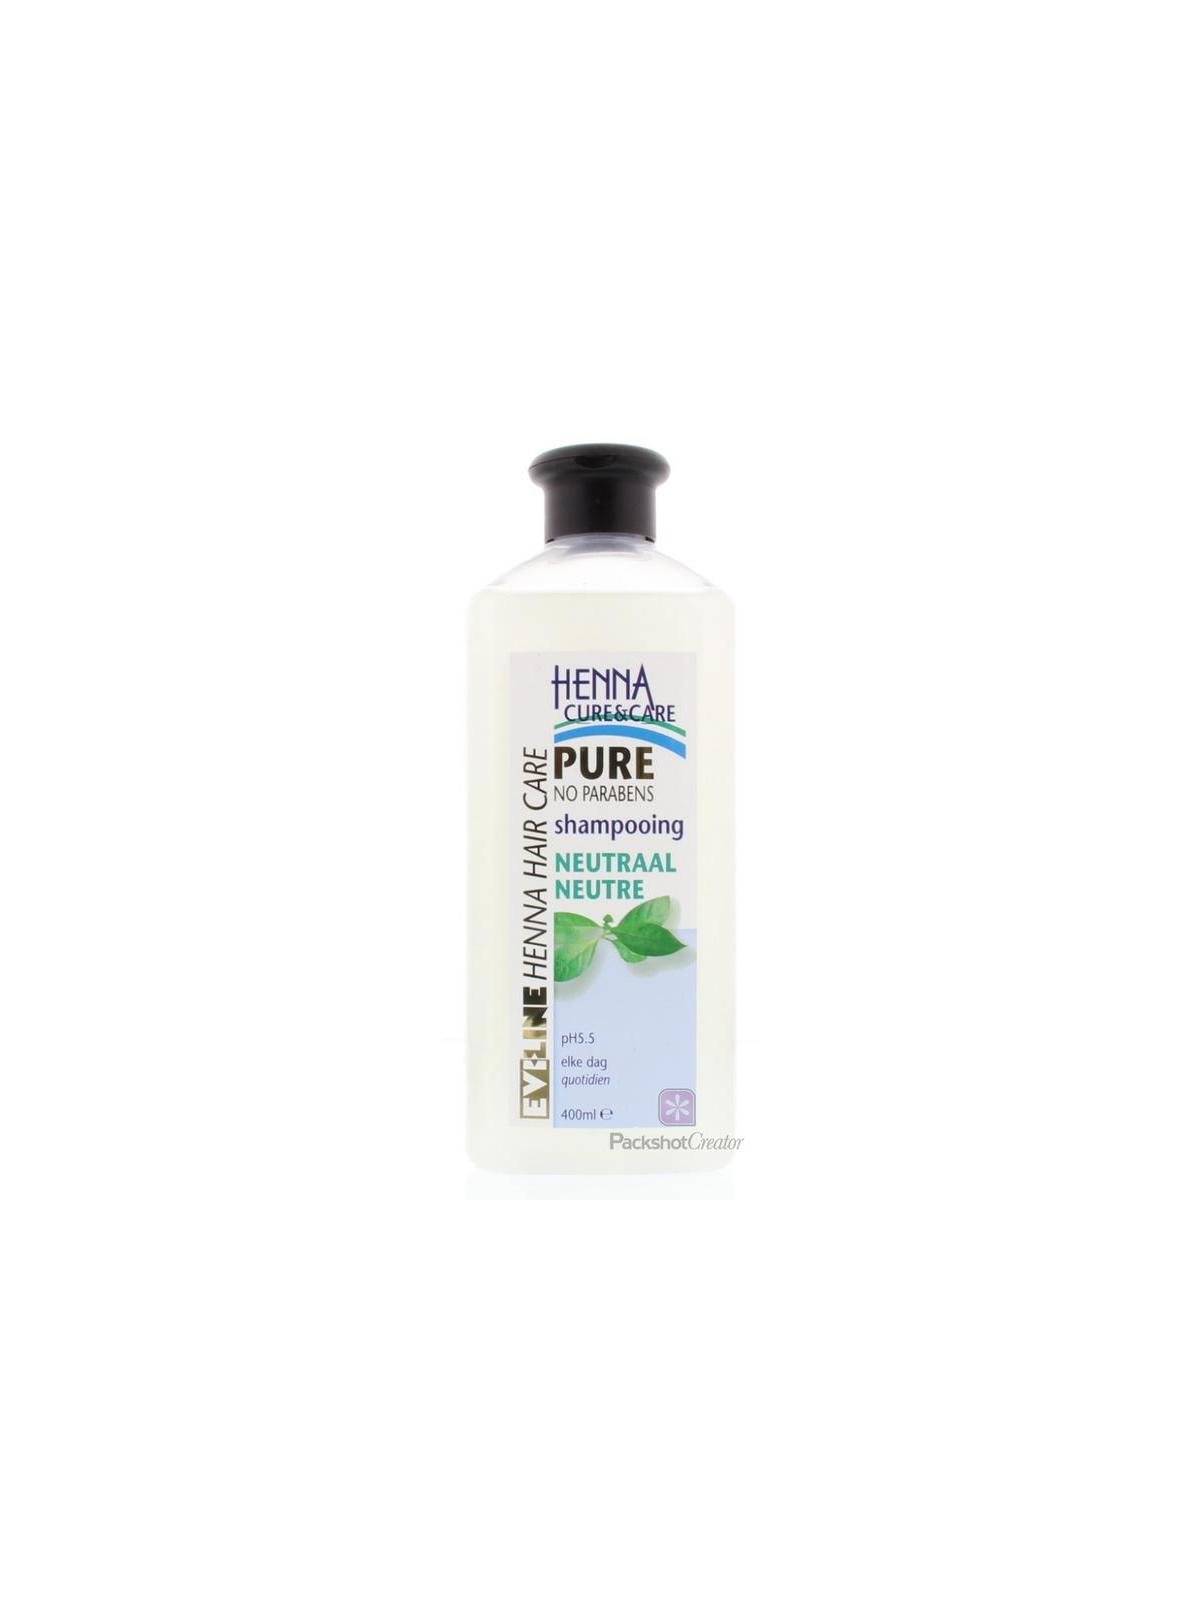 Shampoo pure neutraal